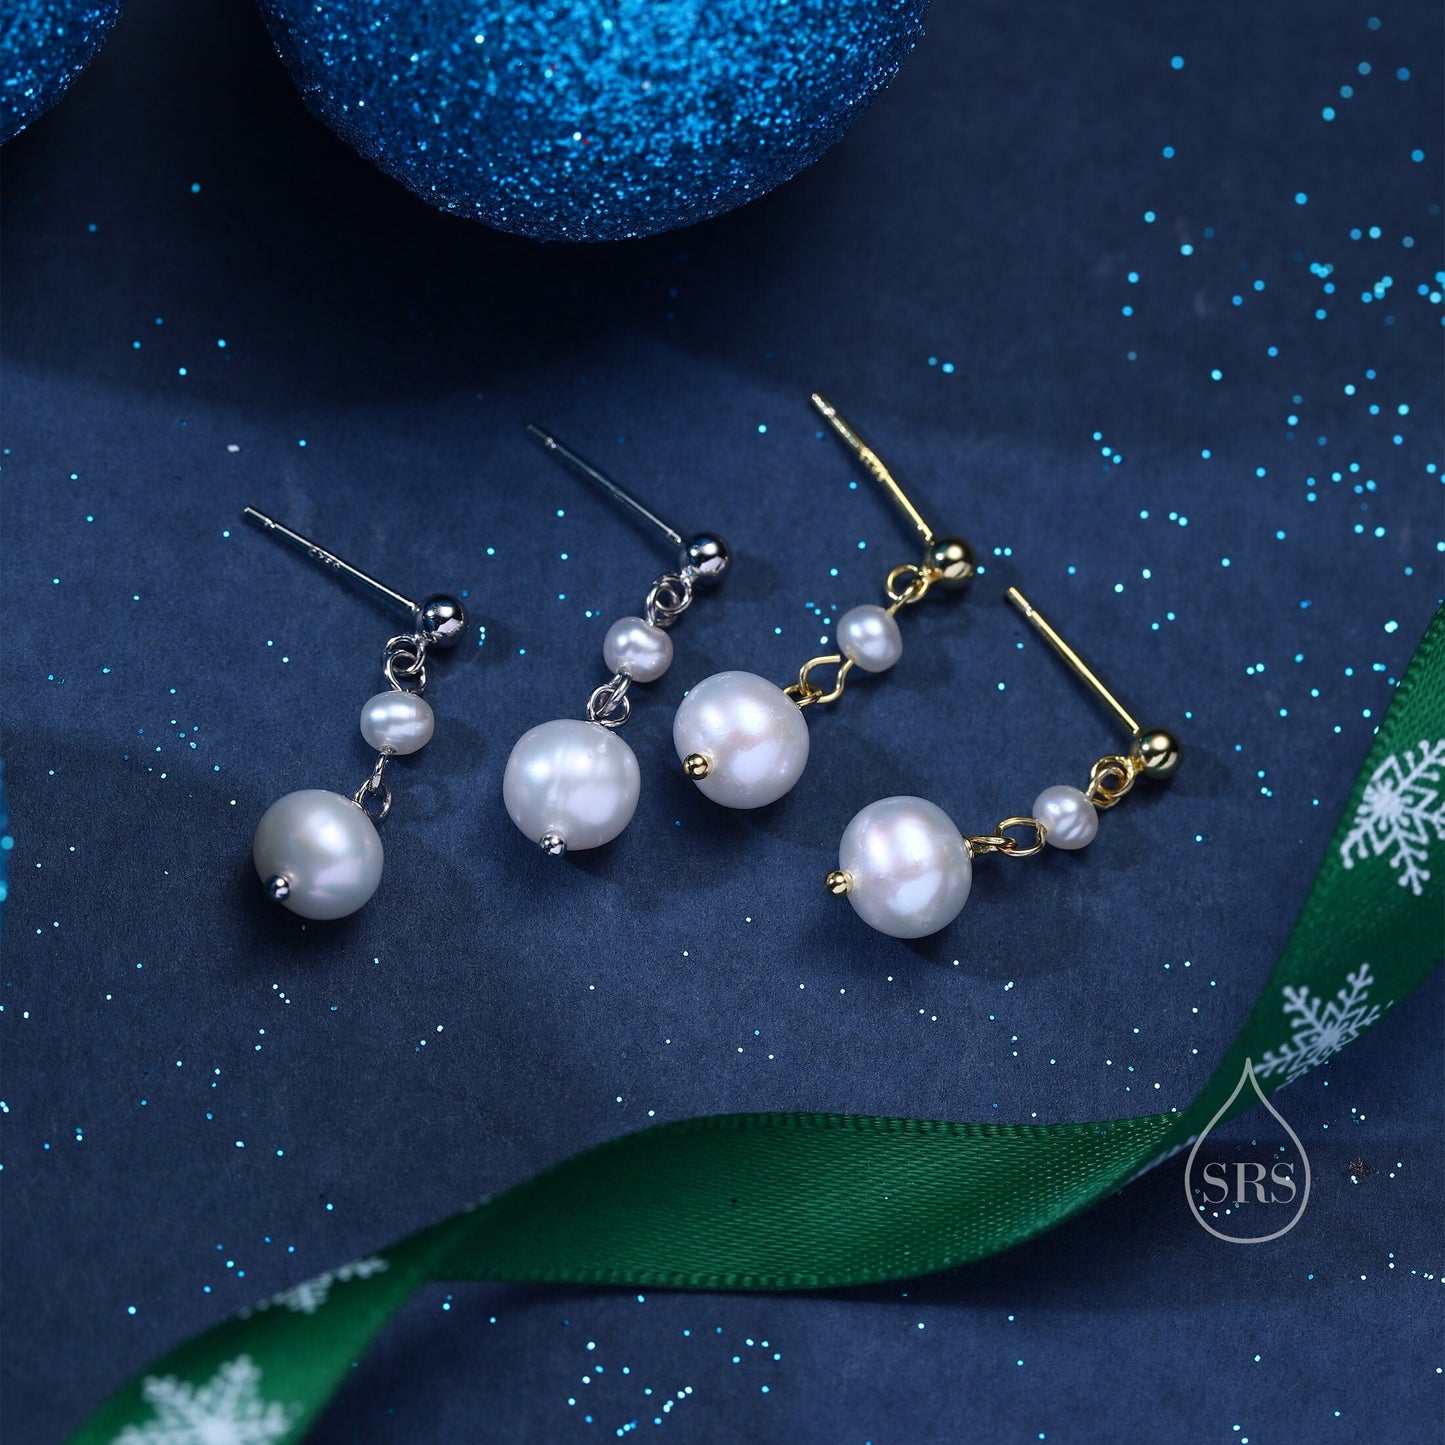 Genuine Freshwater Pearl Drop Earrings in Sterling Silver, Delicate Keshi Pearl Earrings, Double Pearl Stud Dangle Earrings